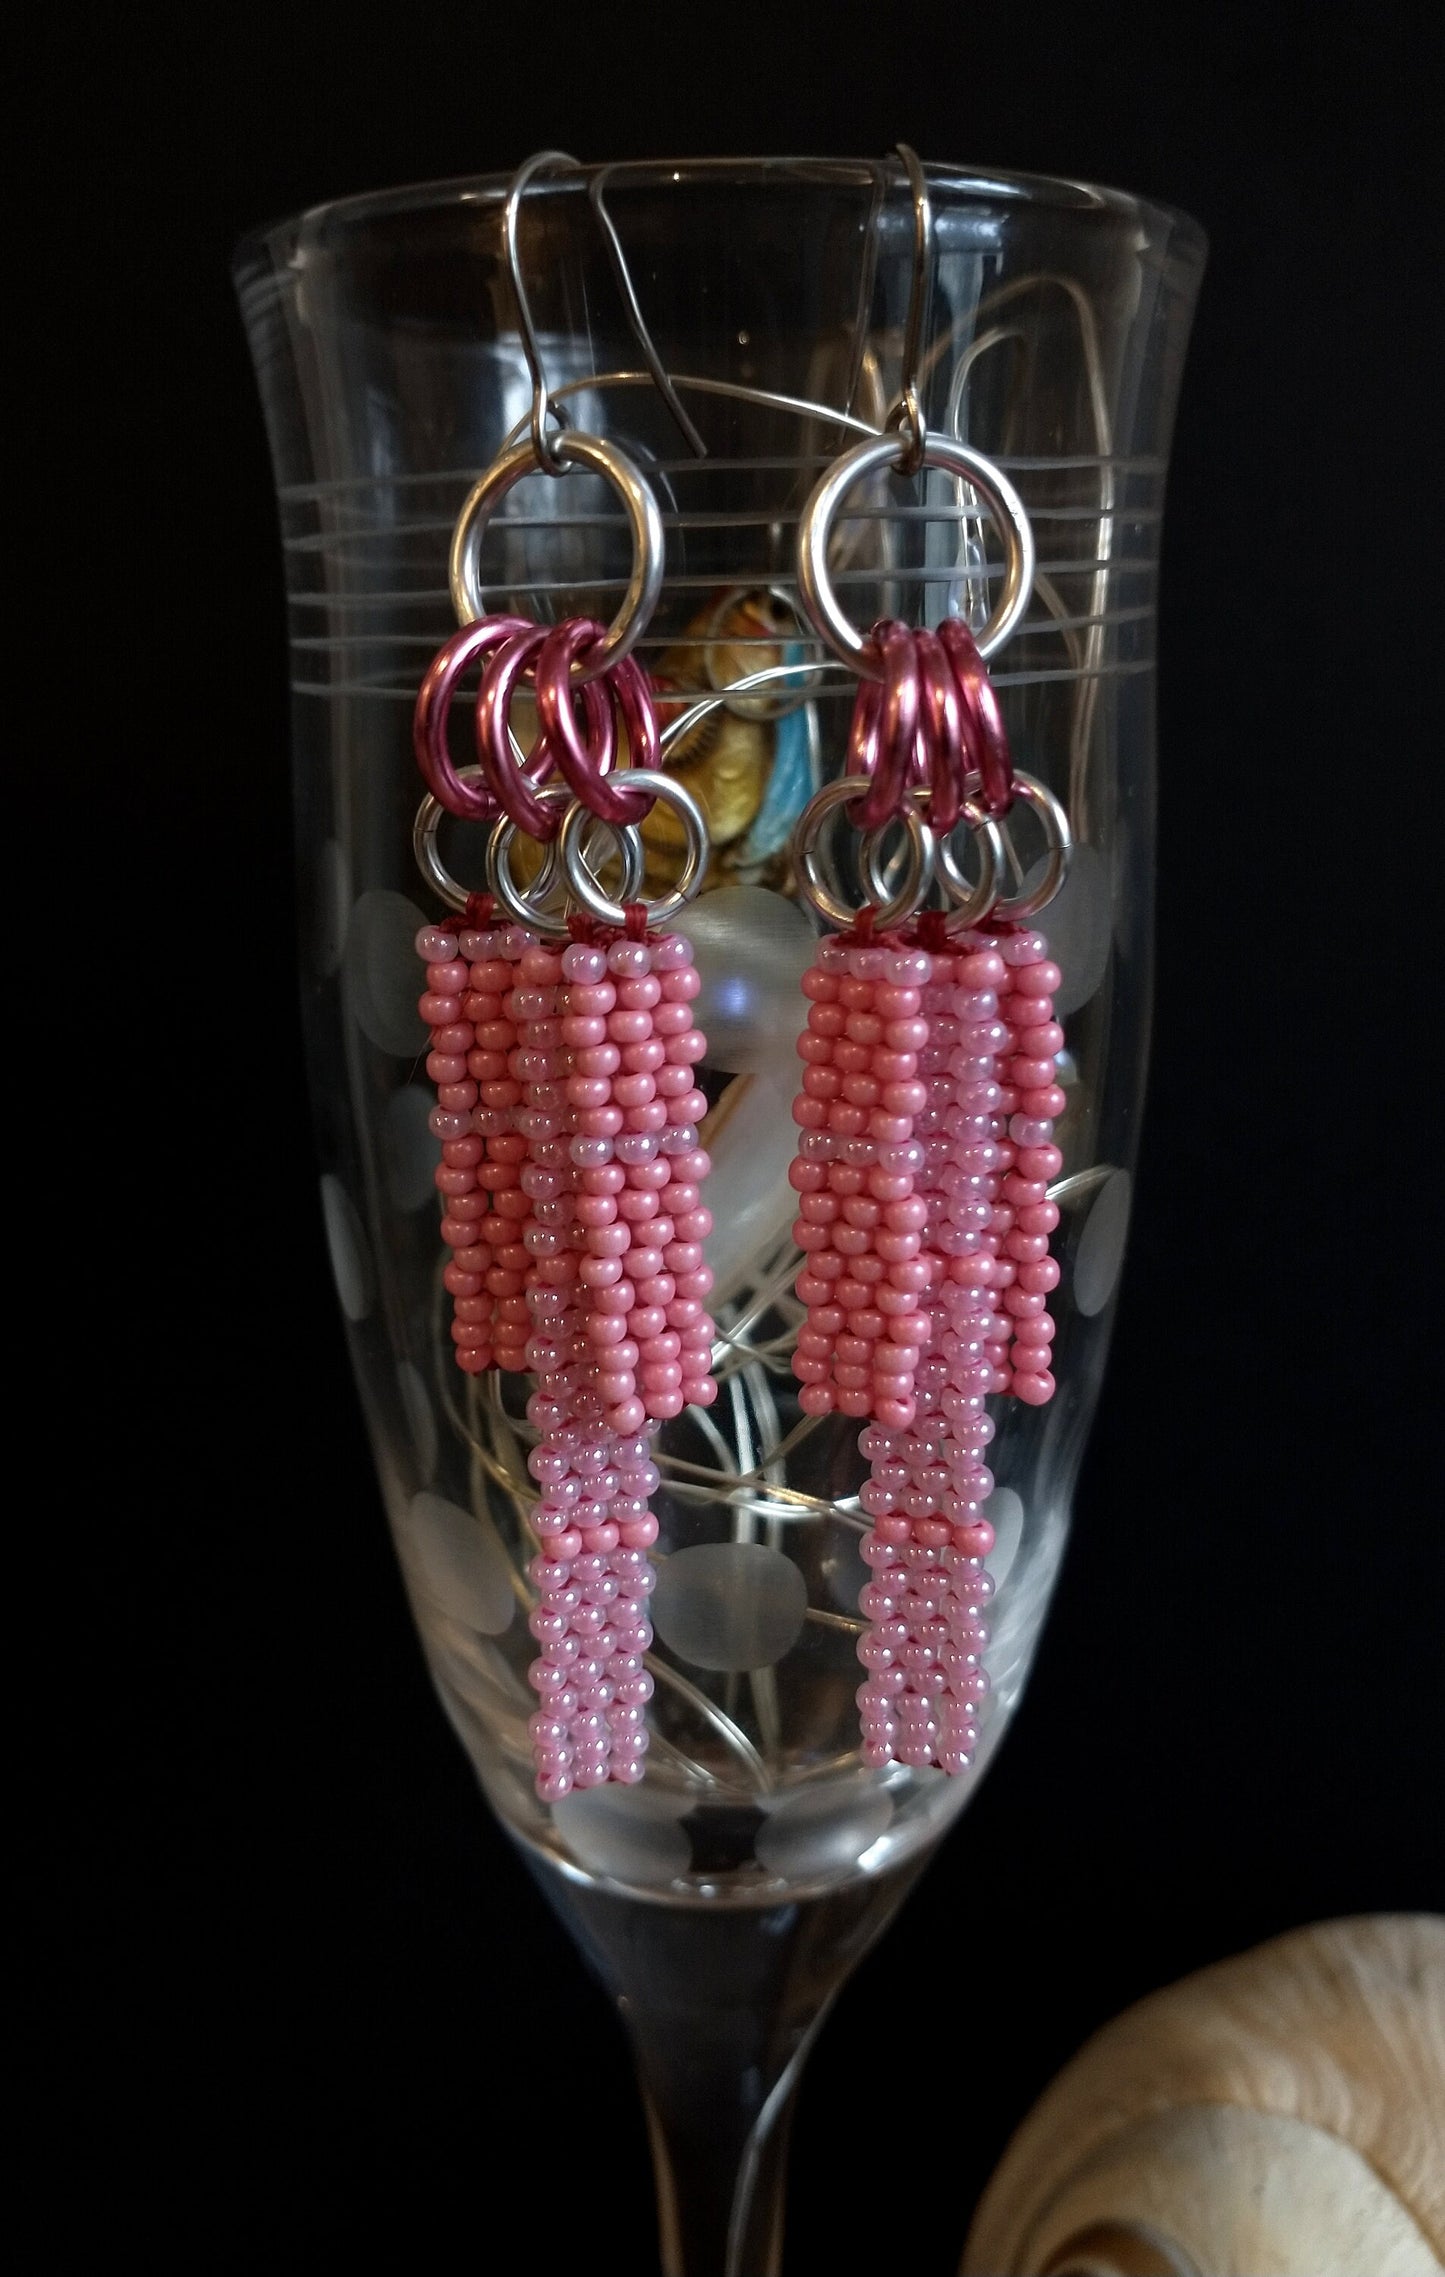 Soft Pink Beaded Bar Drop Earrings | Pink Aesthetic Geometric Fringe | Handwoven Native Beadwork | Chic Bohemian Jewelry | PNW Artisan Gifts